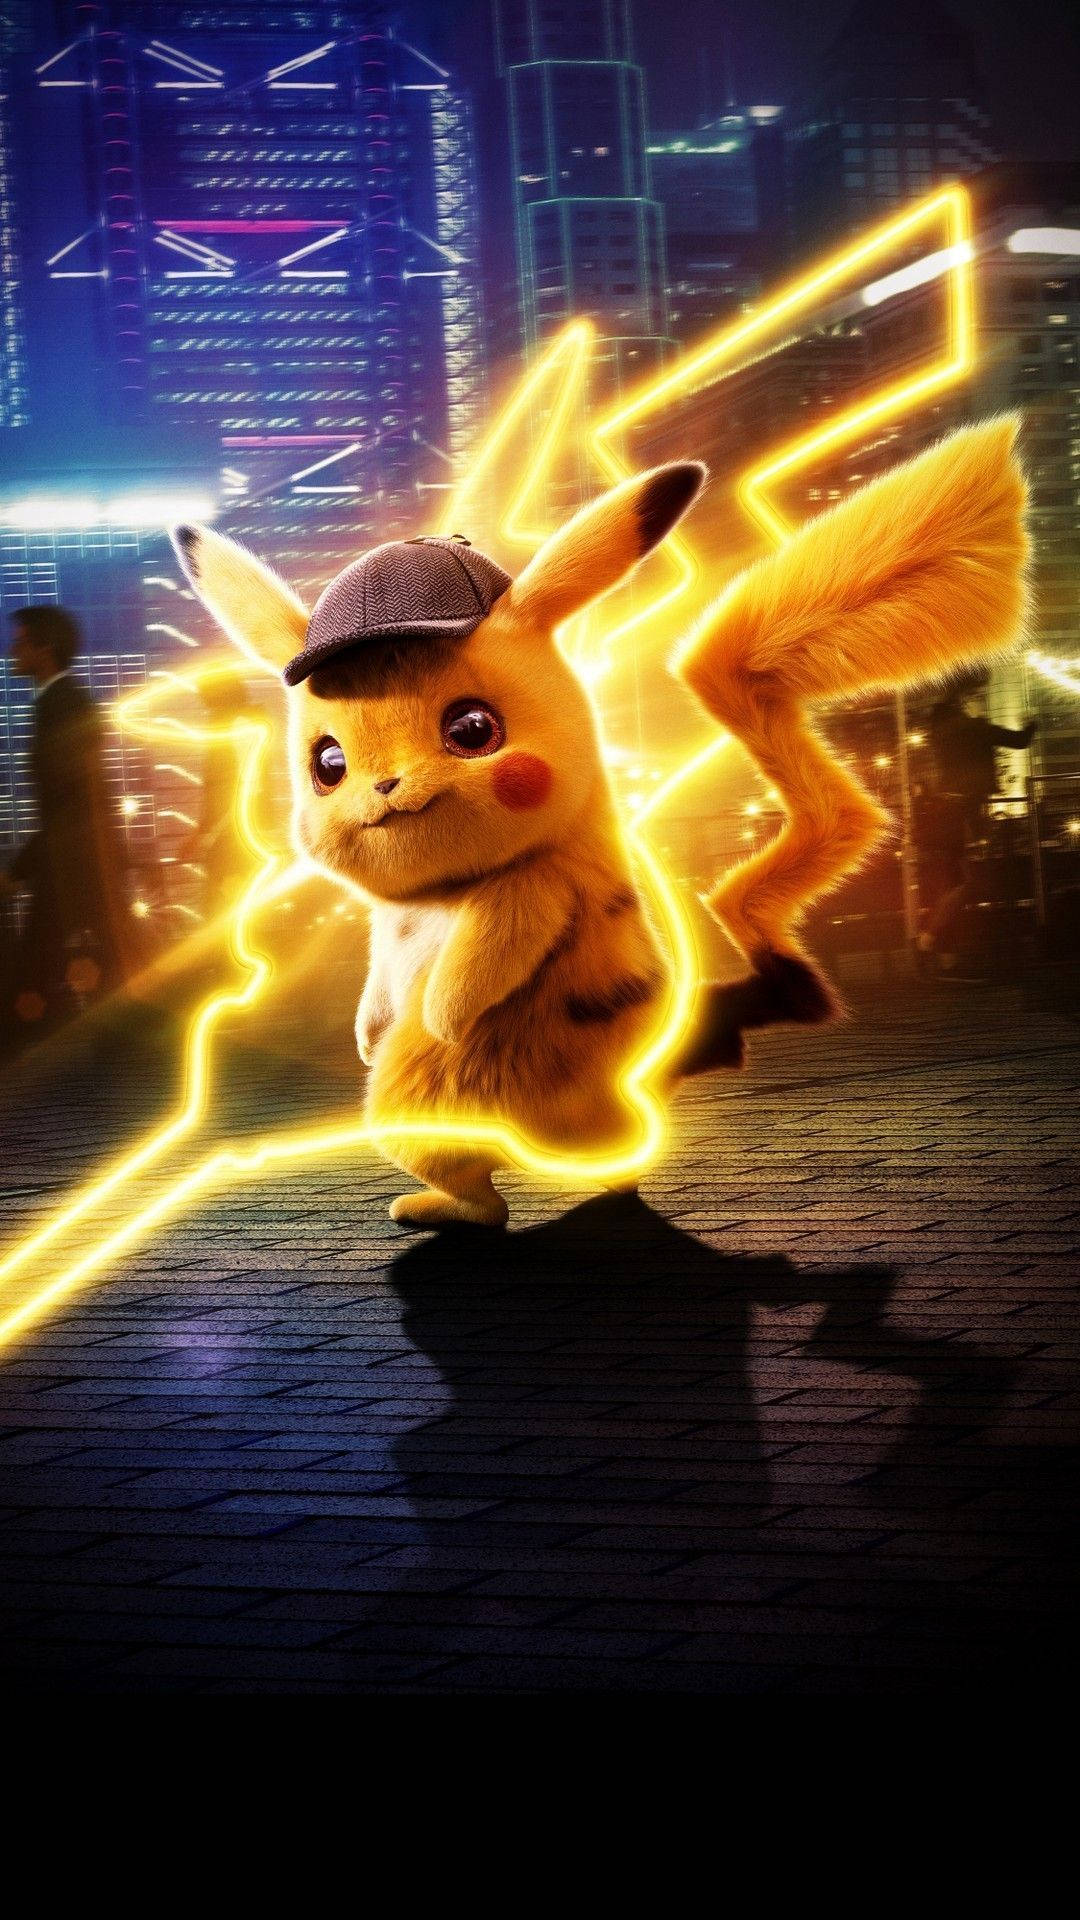 Pikachu Wallpaper Images